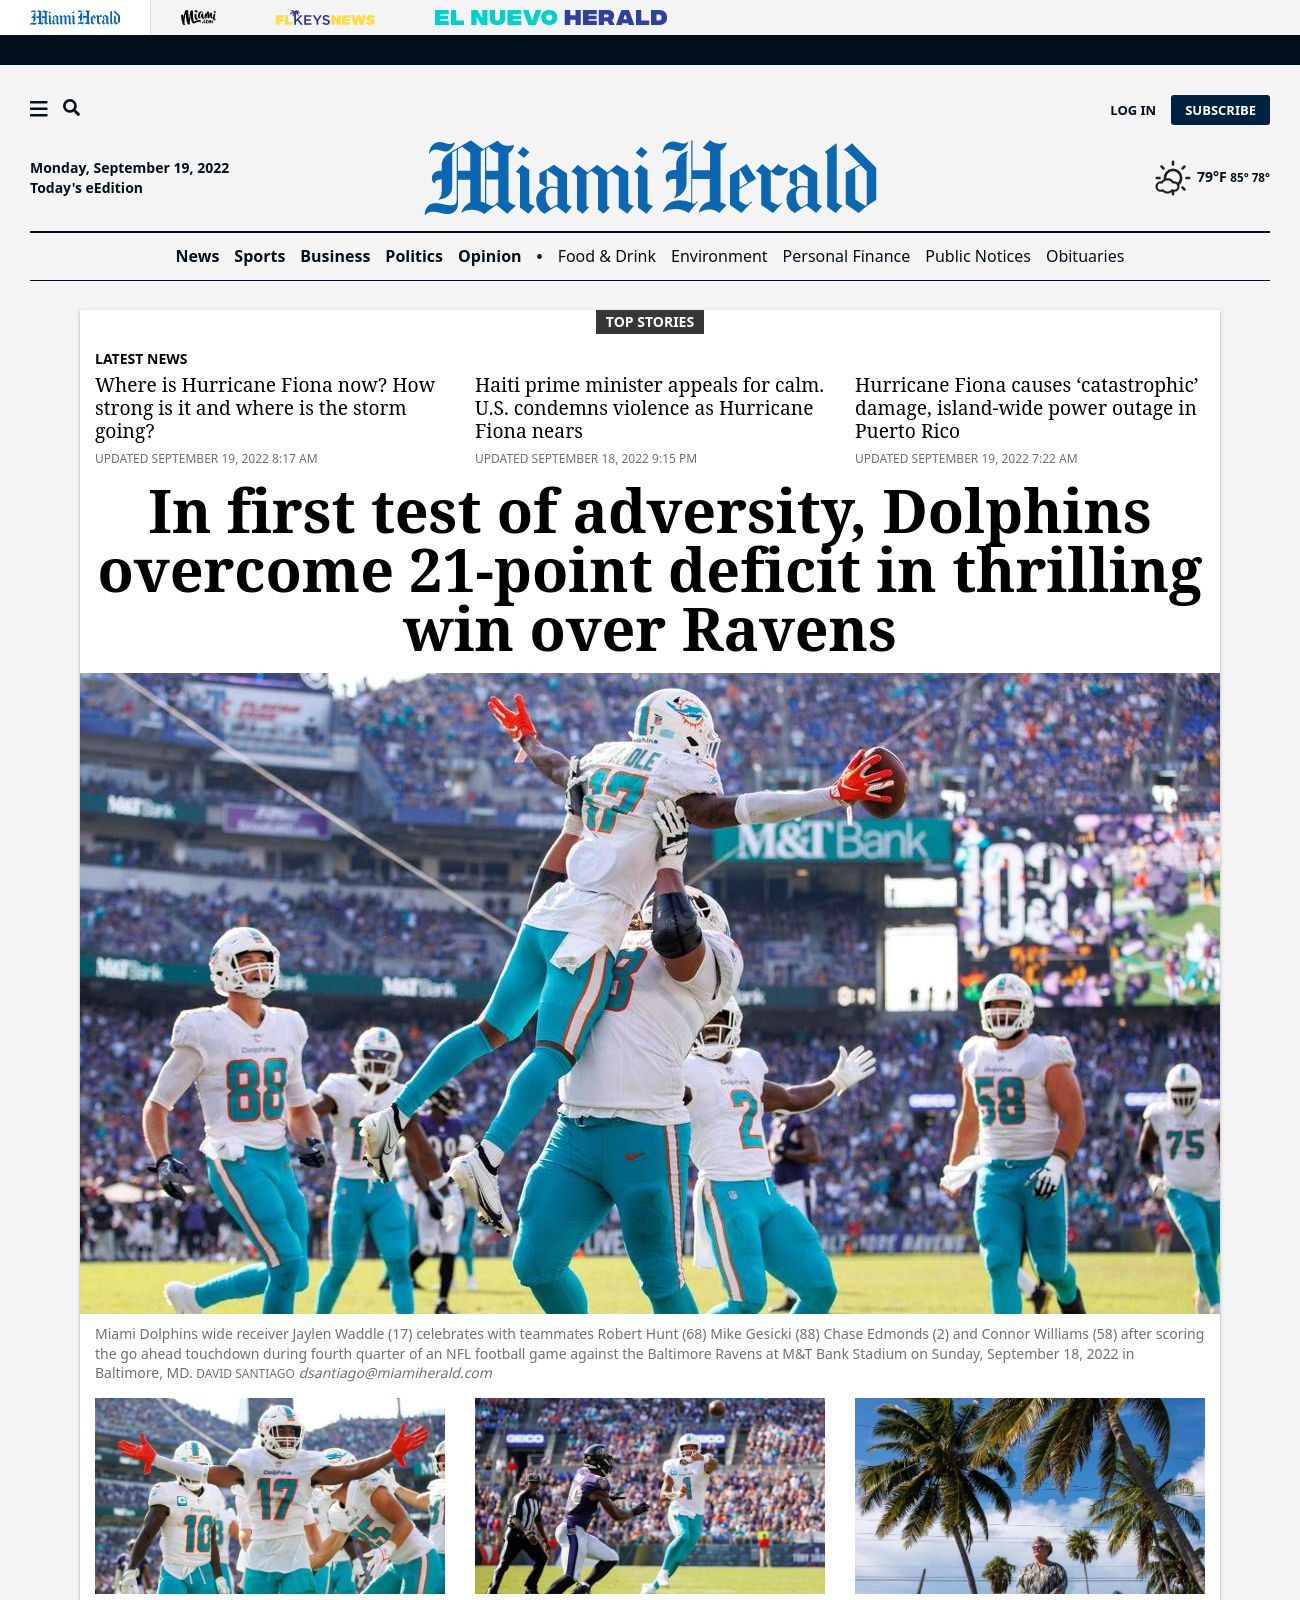 Miami Herald at 2022-09-19 08:56:48-04:00 local time